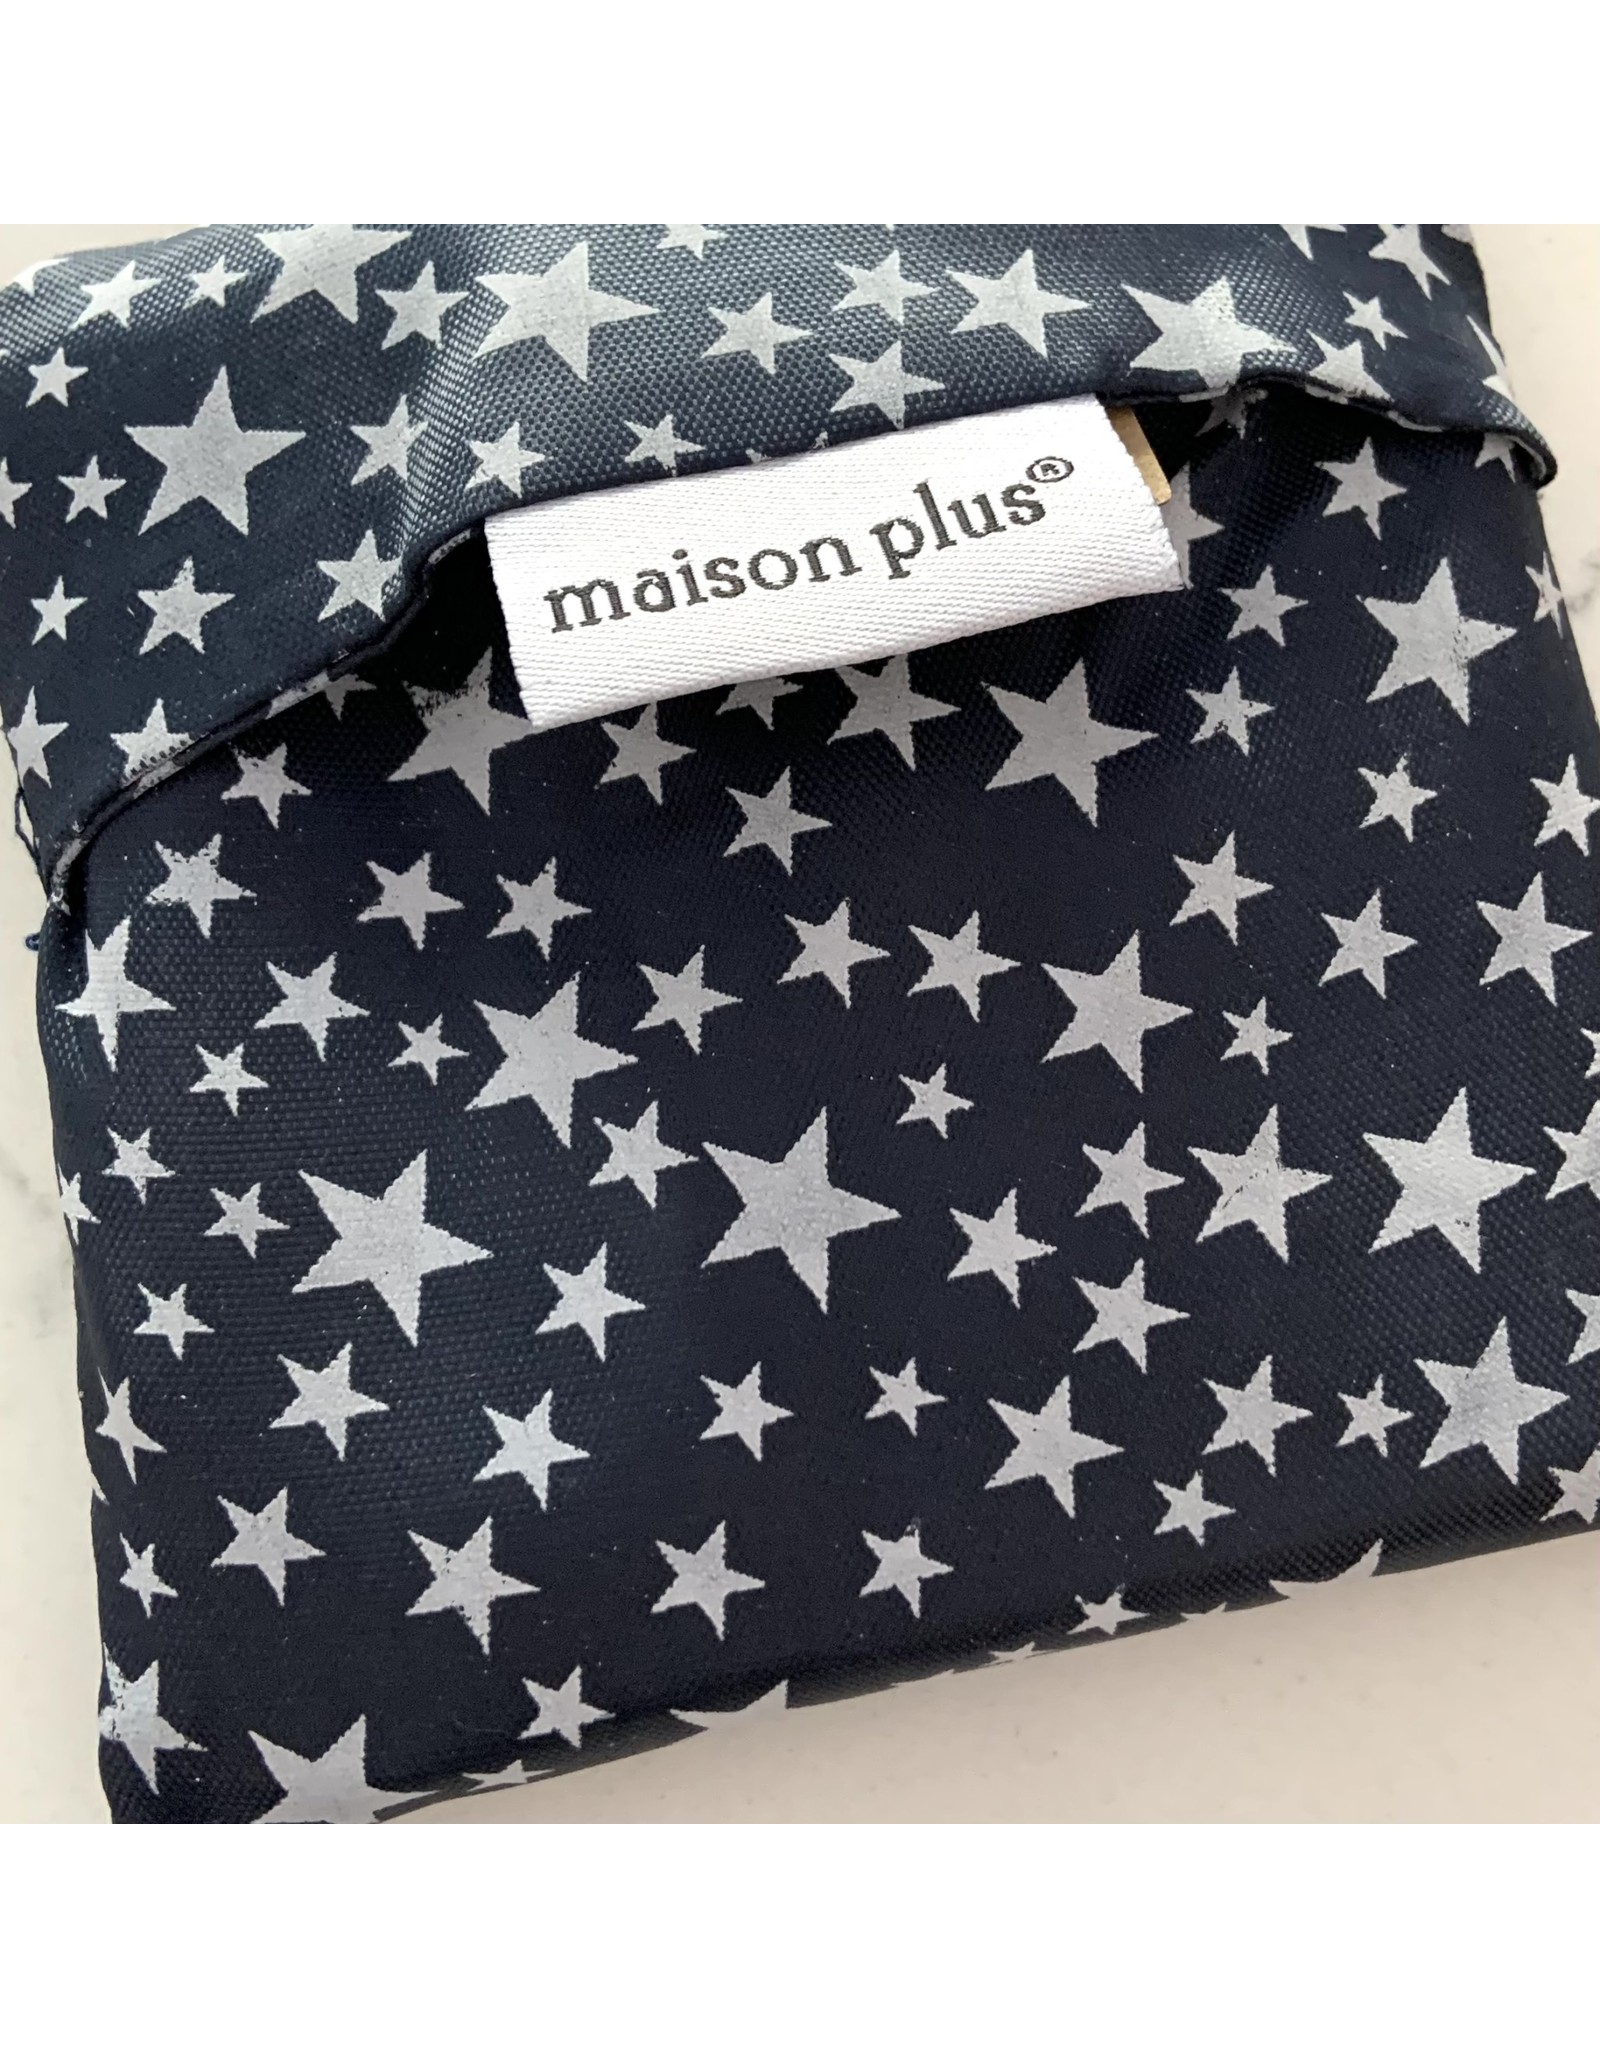 Maison Plus Foldable Shopping Bag